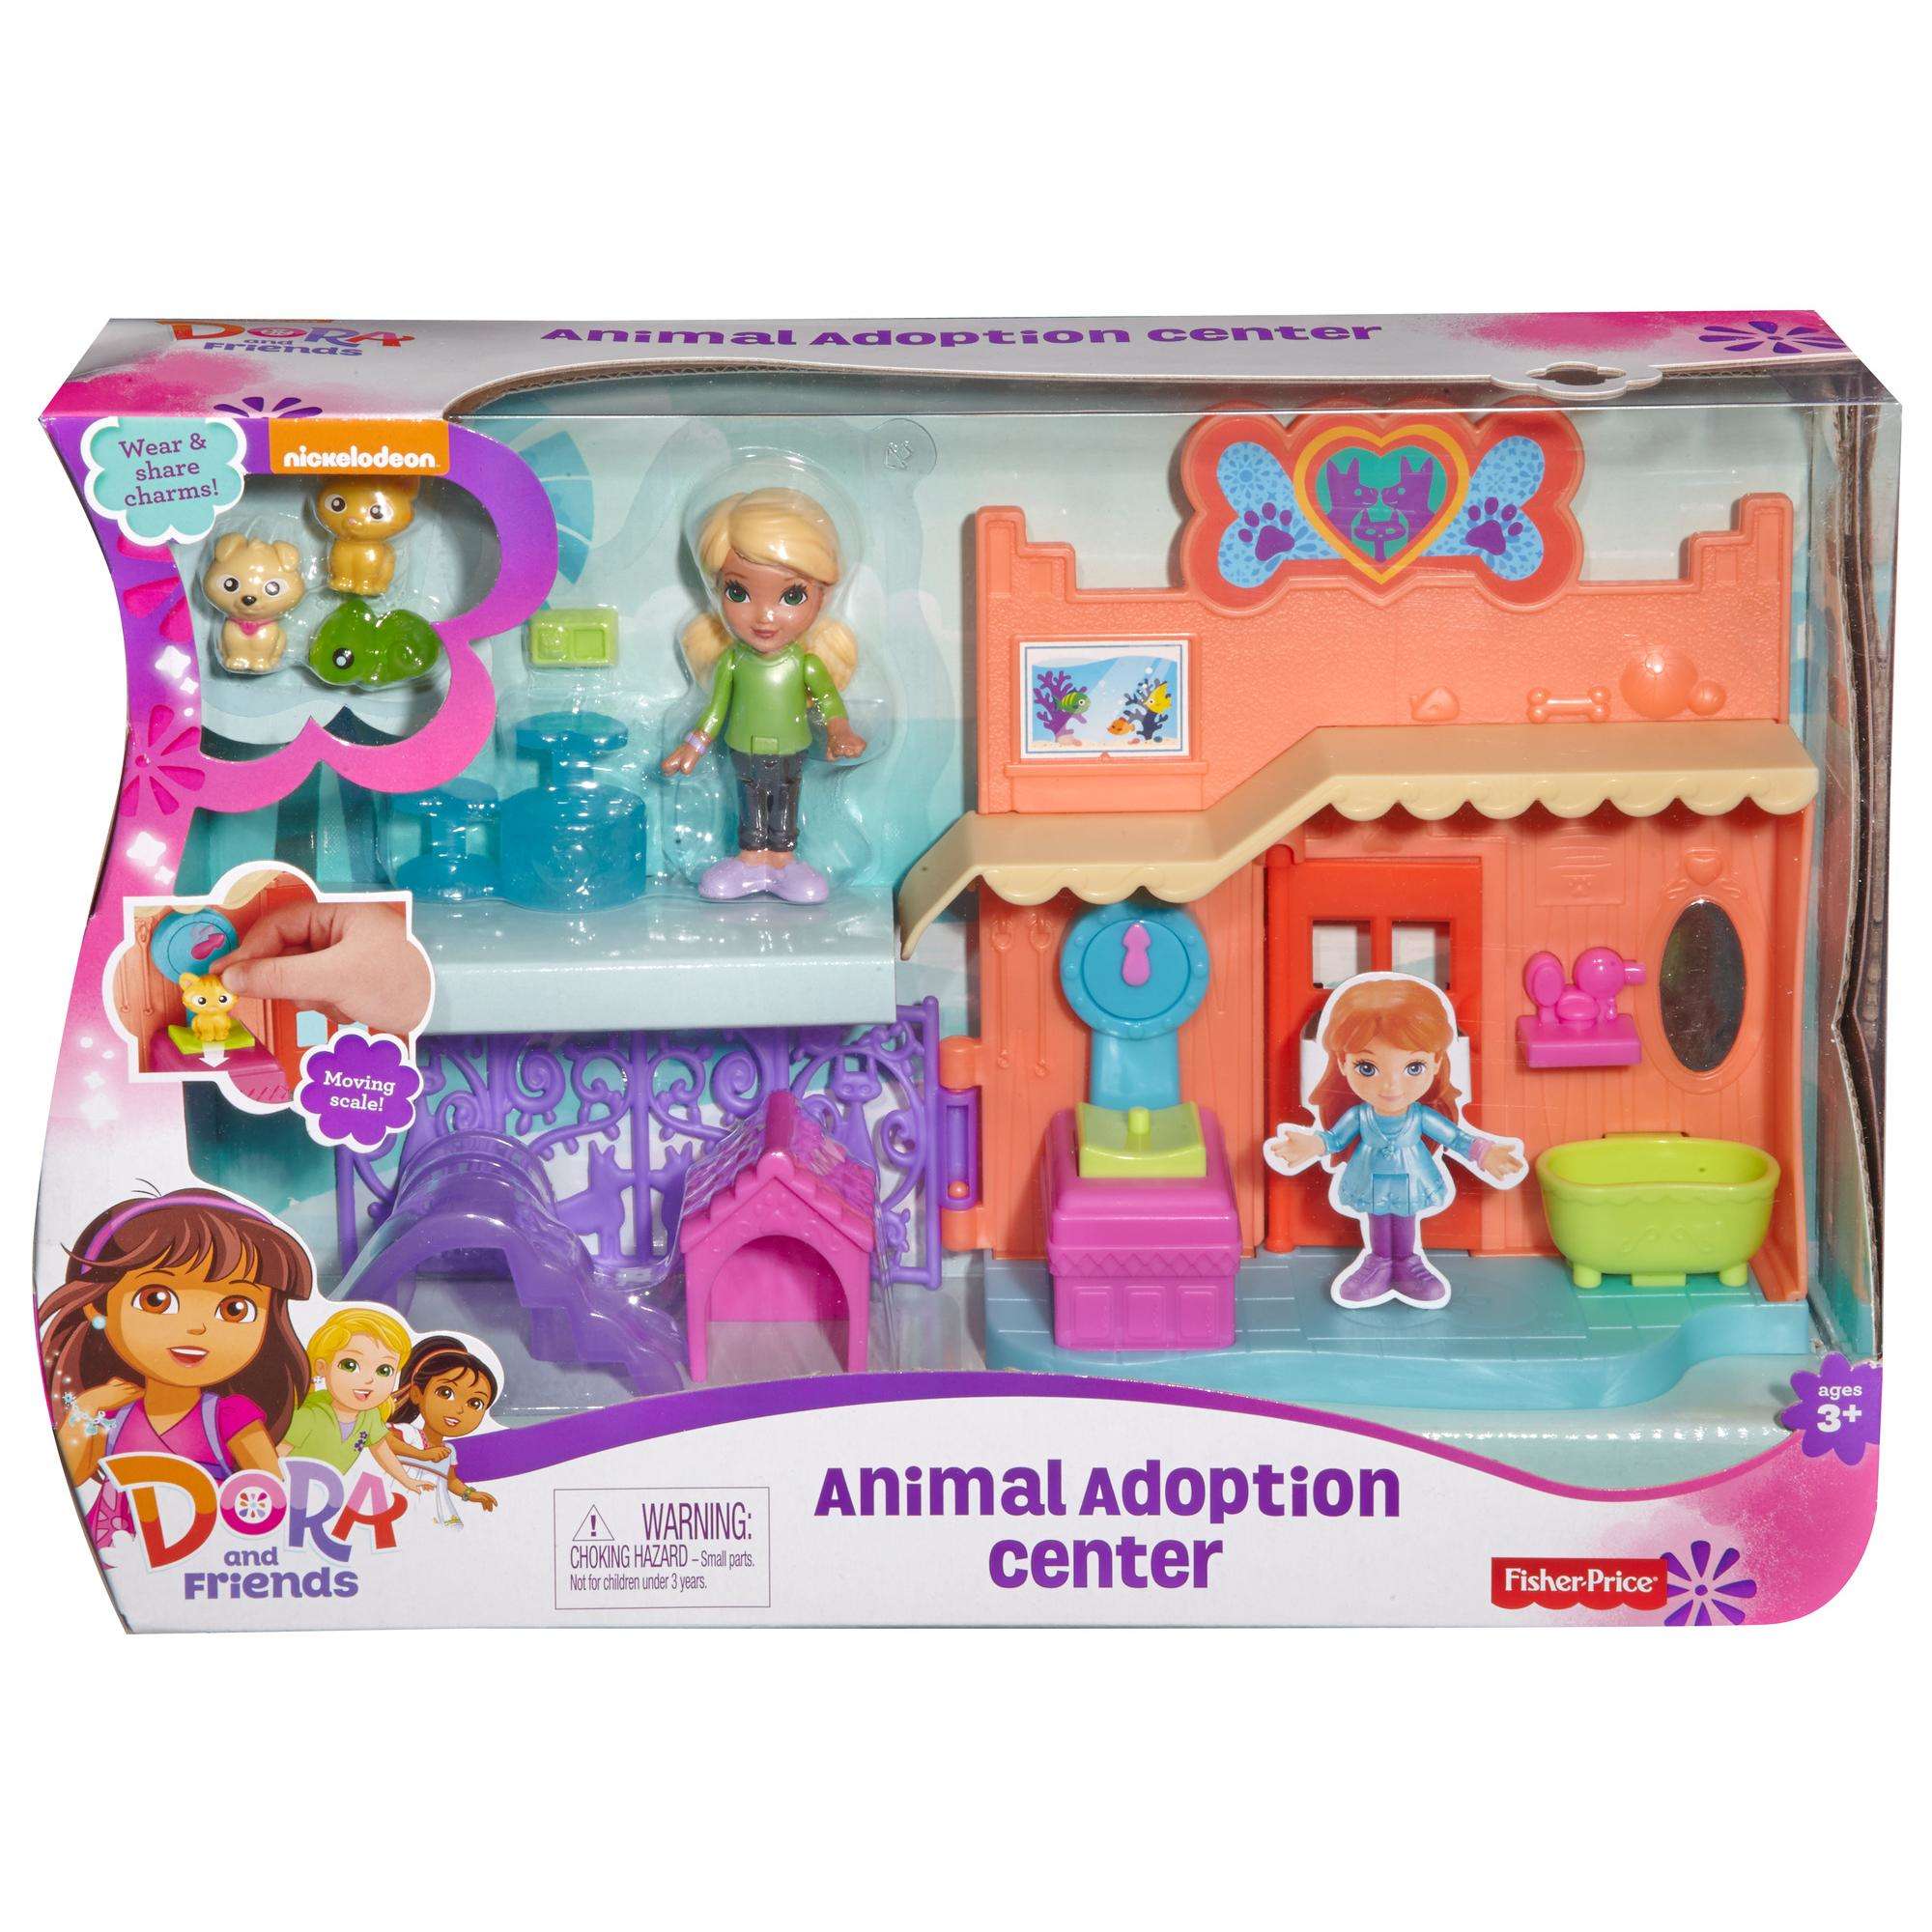 Nickelodeon Dora and Friends Animal Adoption Center Playset - image 5 of 6